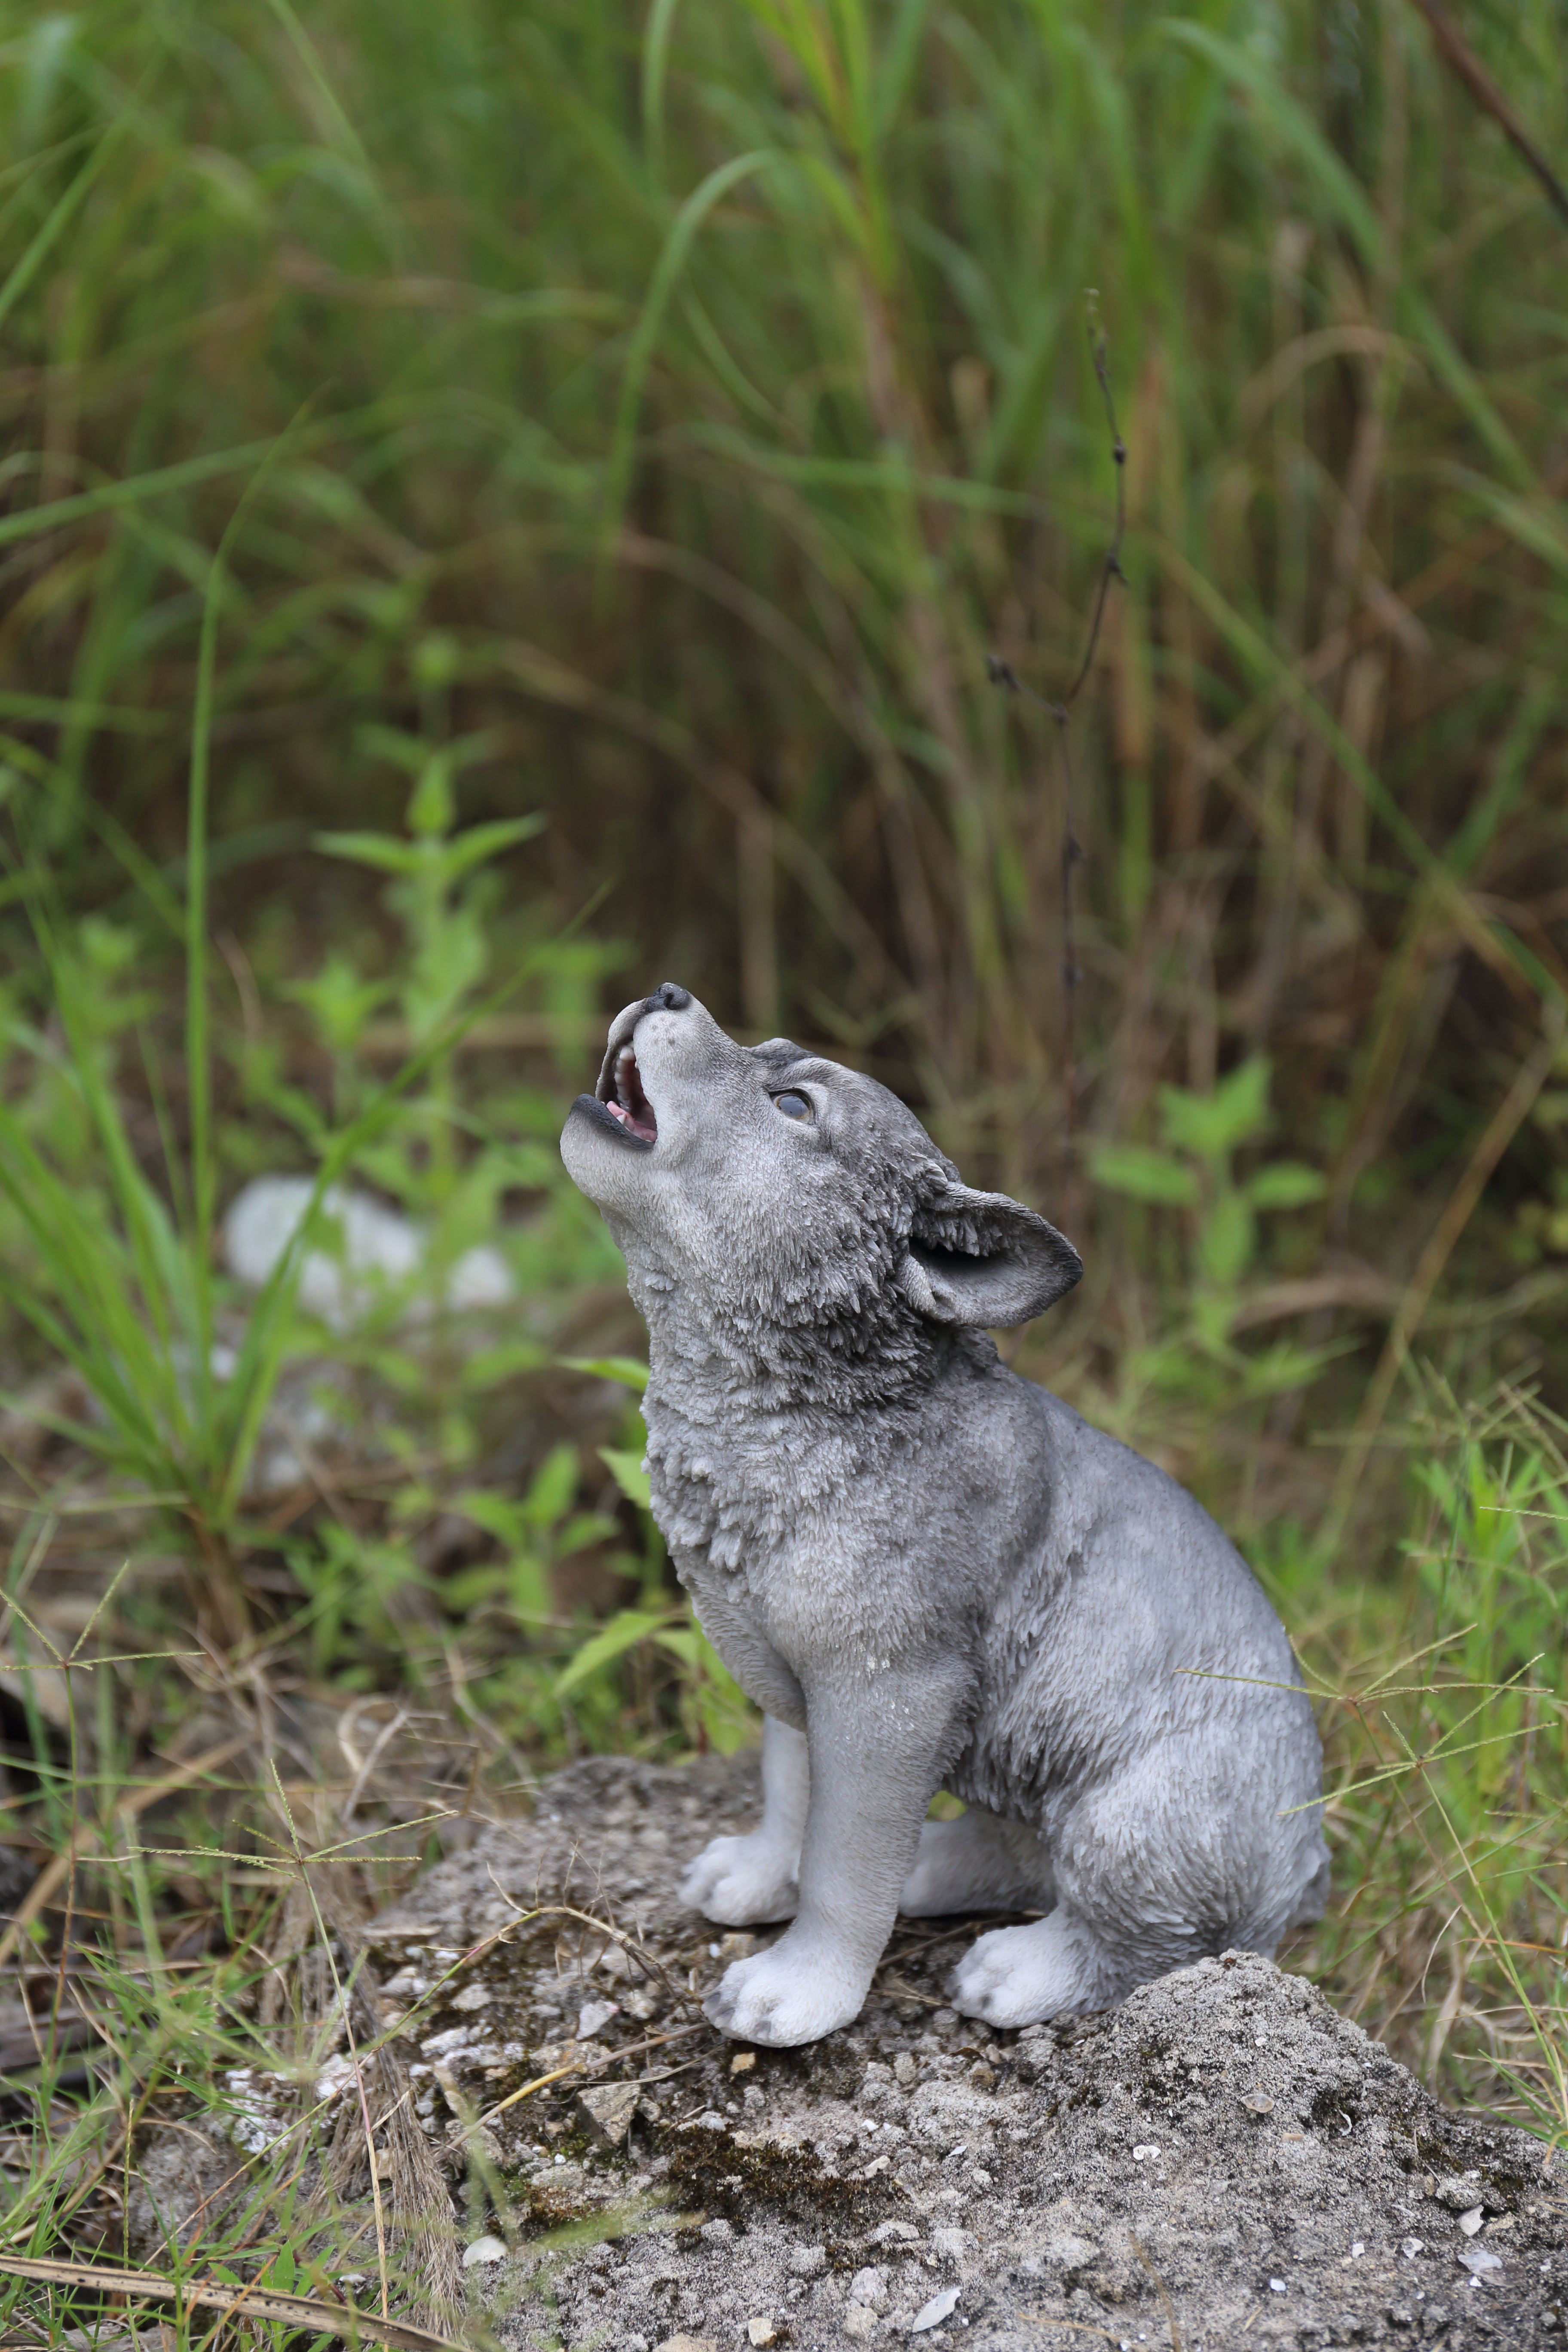 cute wolf pups